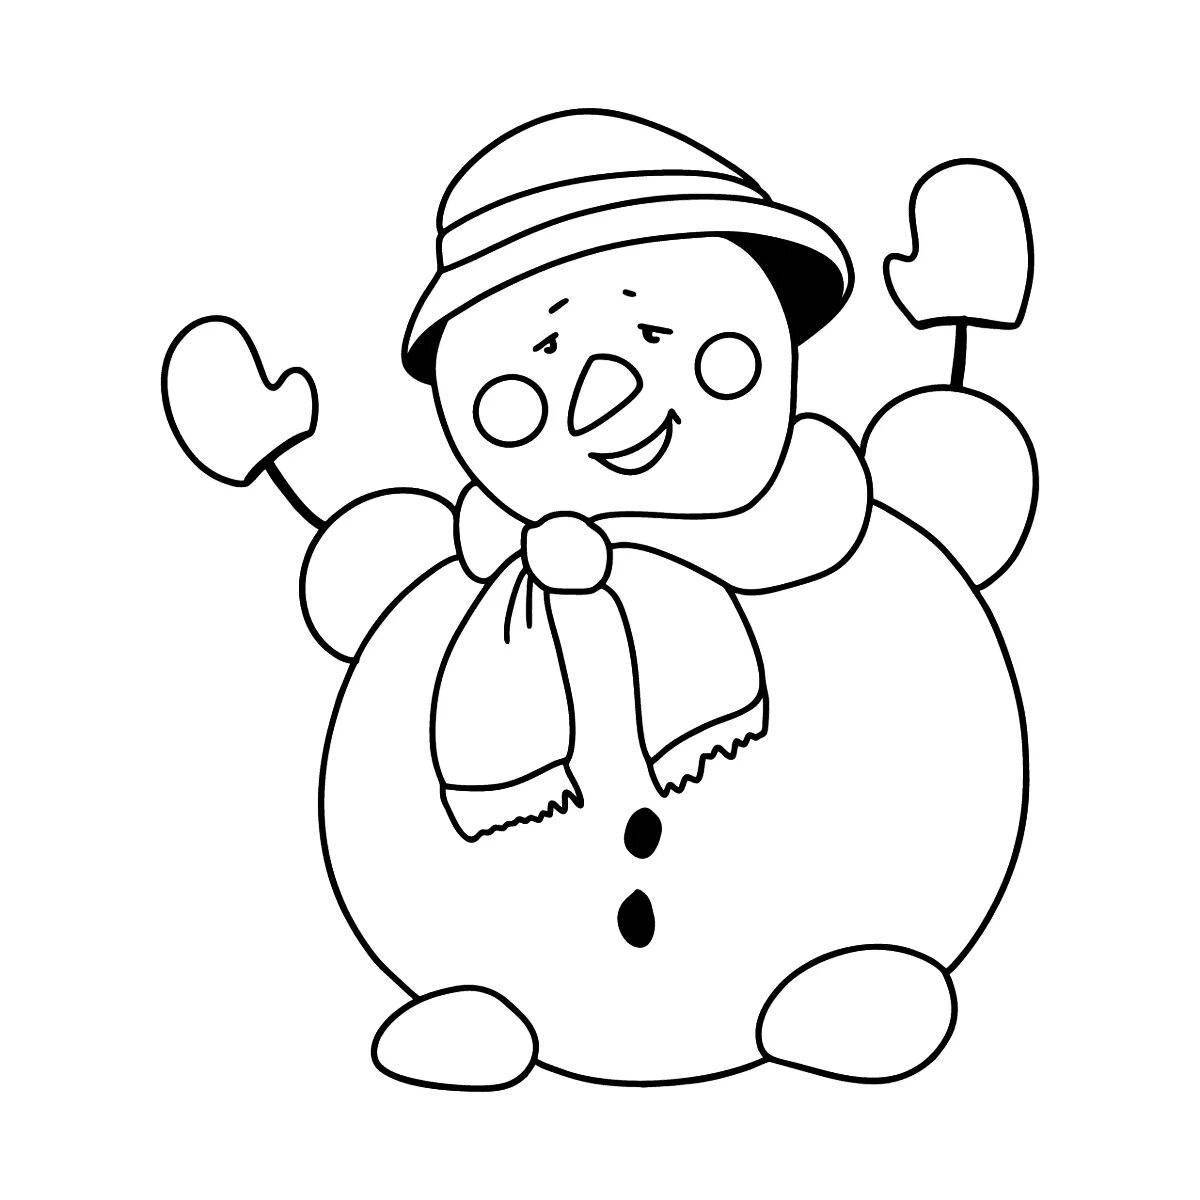 Cute cute snowman coloring book